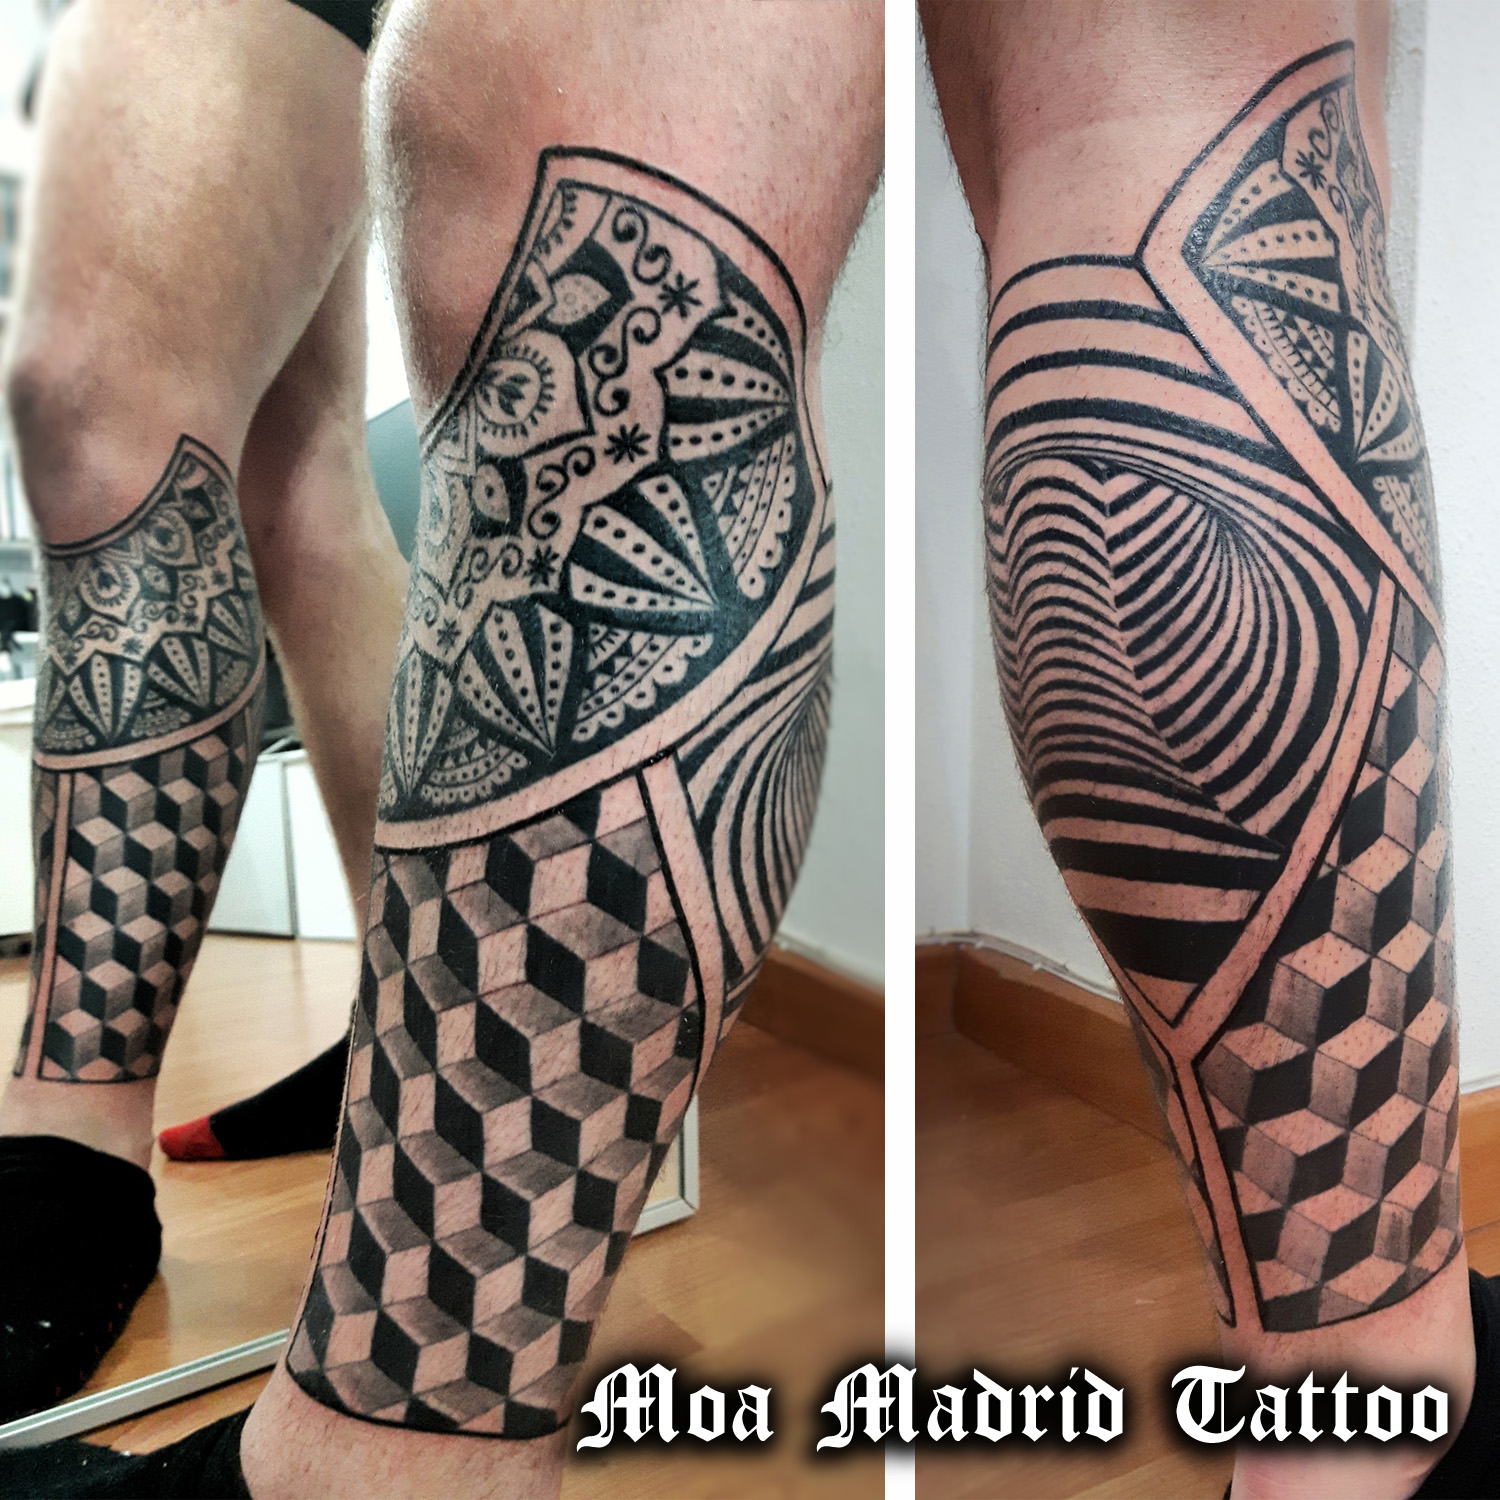 Tatuajes geométricos, op-art y mandala en este diseño completo de tattoo rodeando la pierna